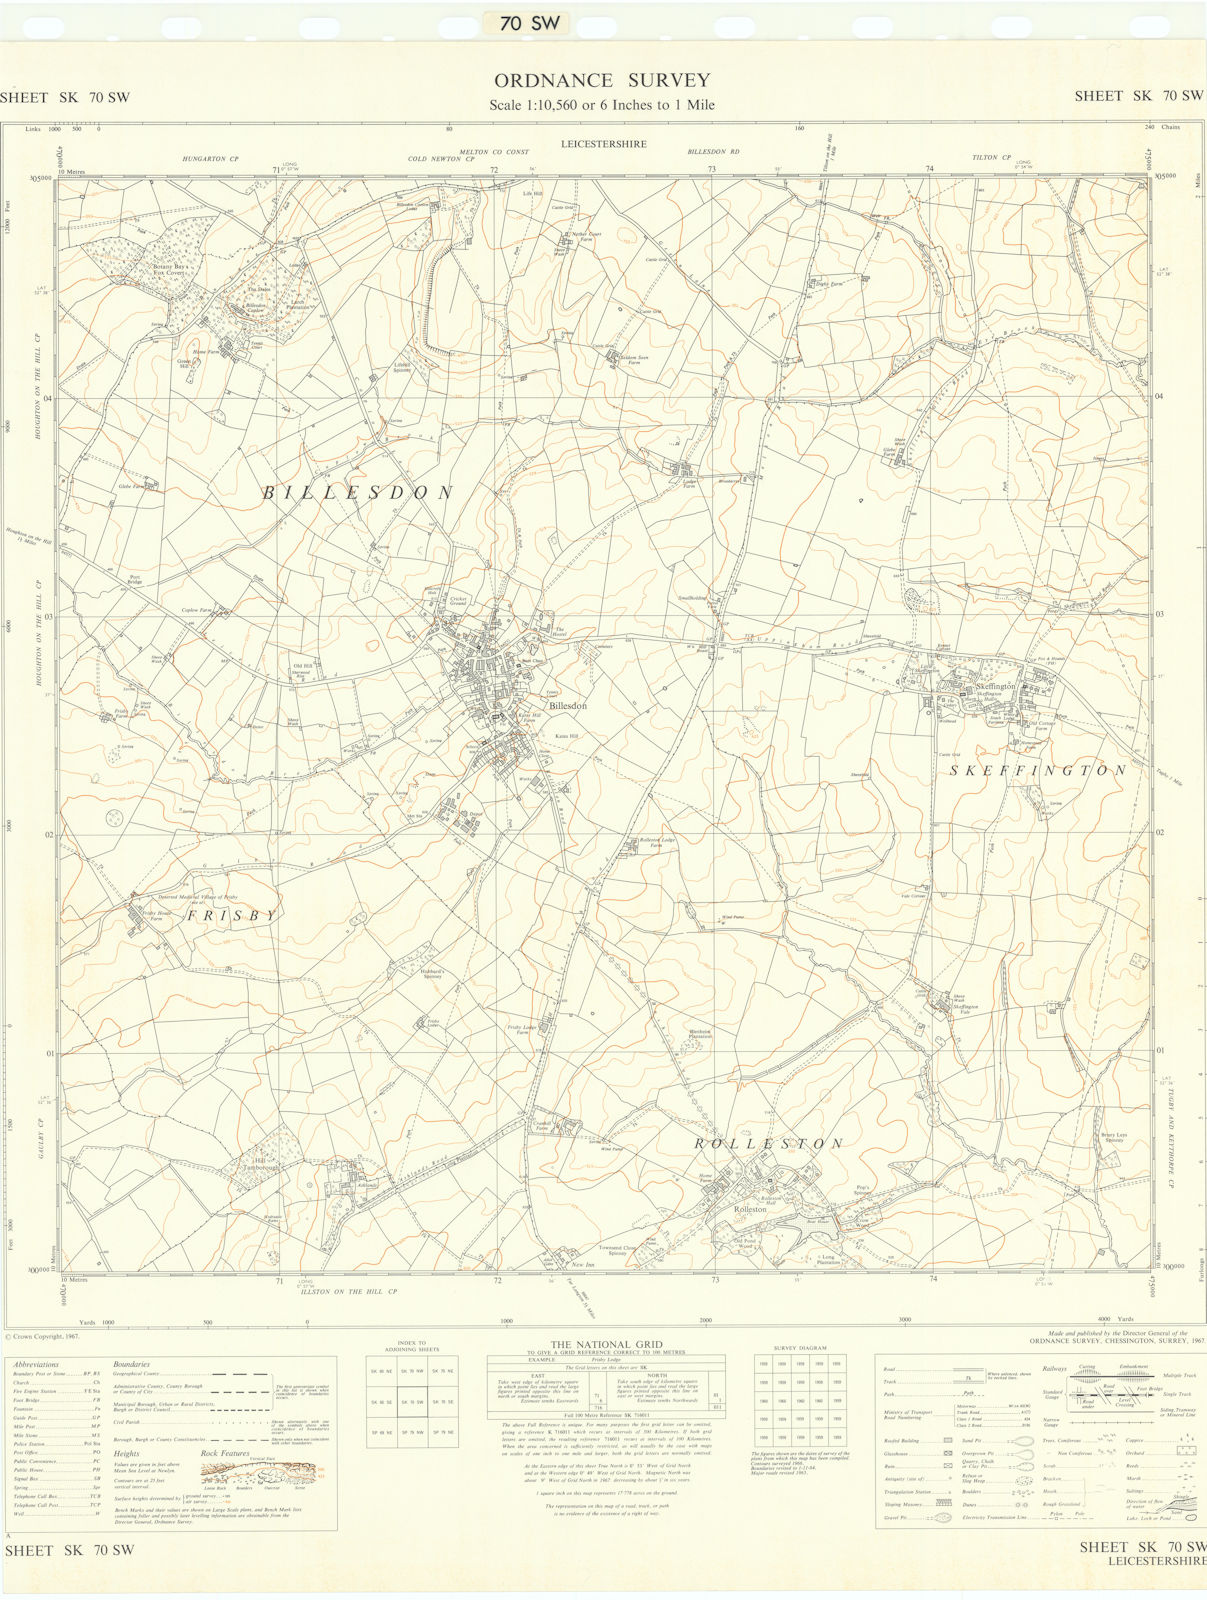 Ordnance Survey SK70SW Leicestershire Billesdon Skeffington Rolleston 1967 map